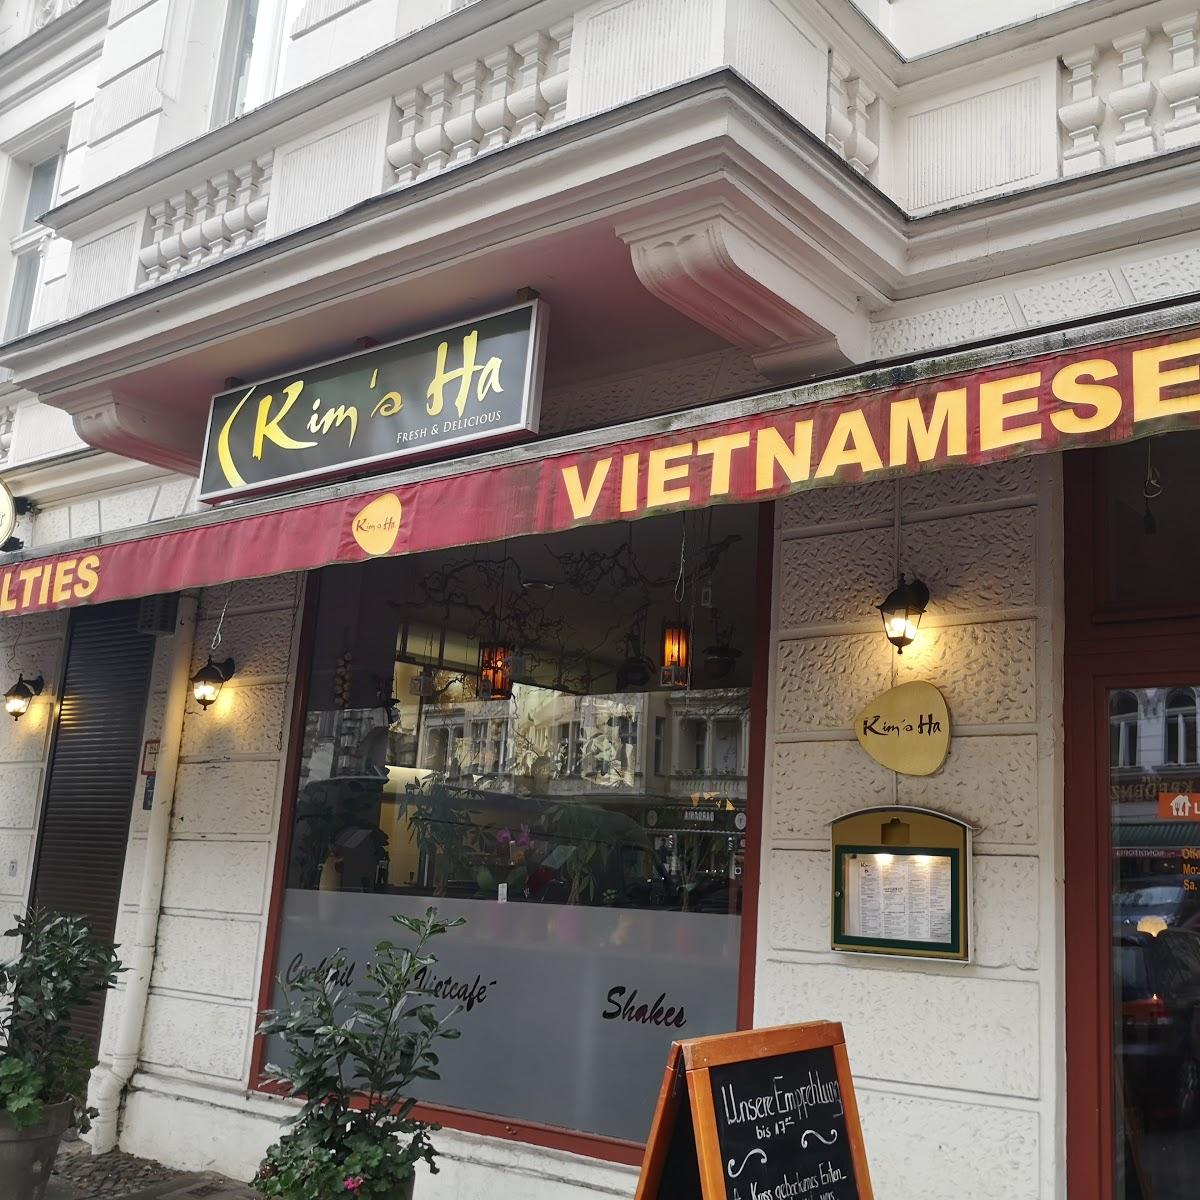 Restaurant "Kim